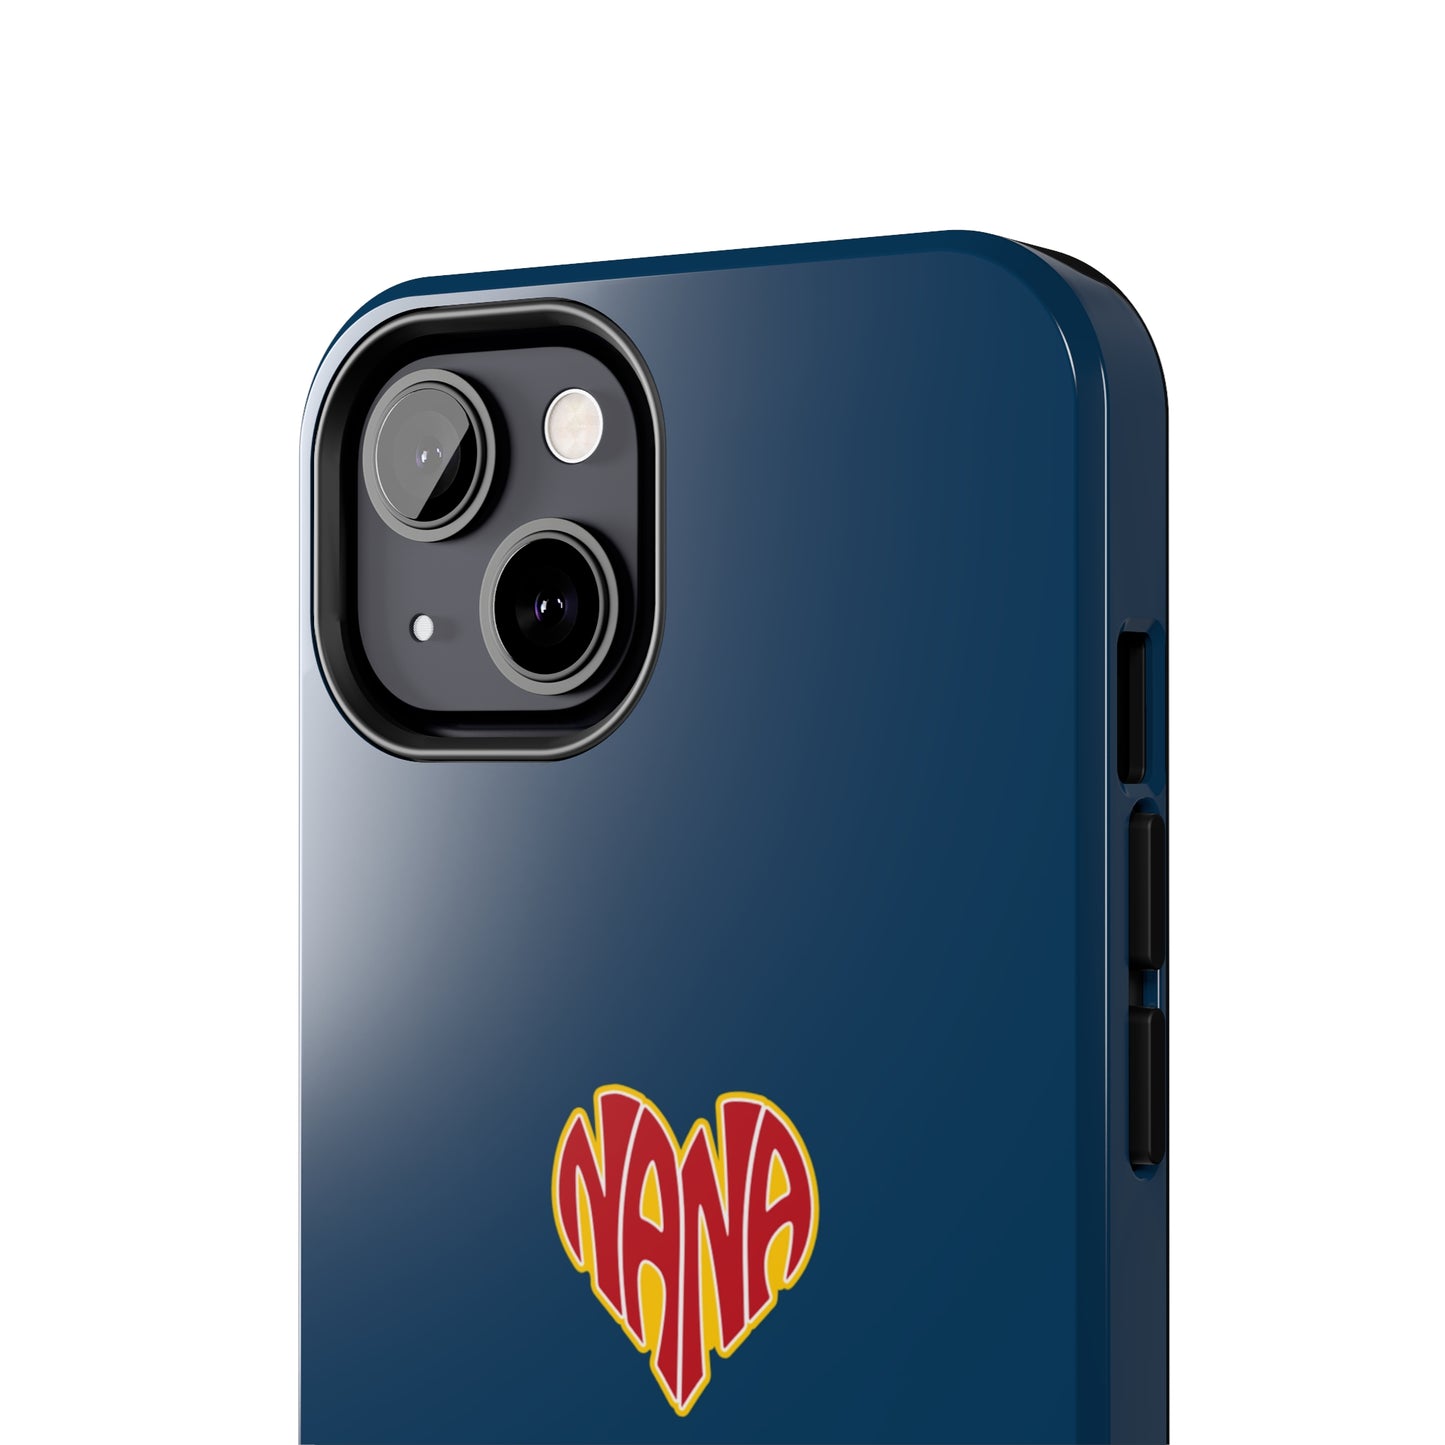 Nana Superhero | Mostly iPhone Cases | MIC